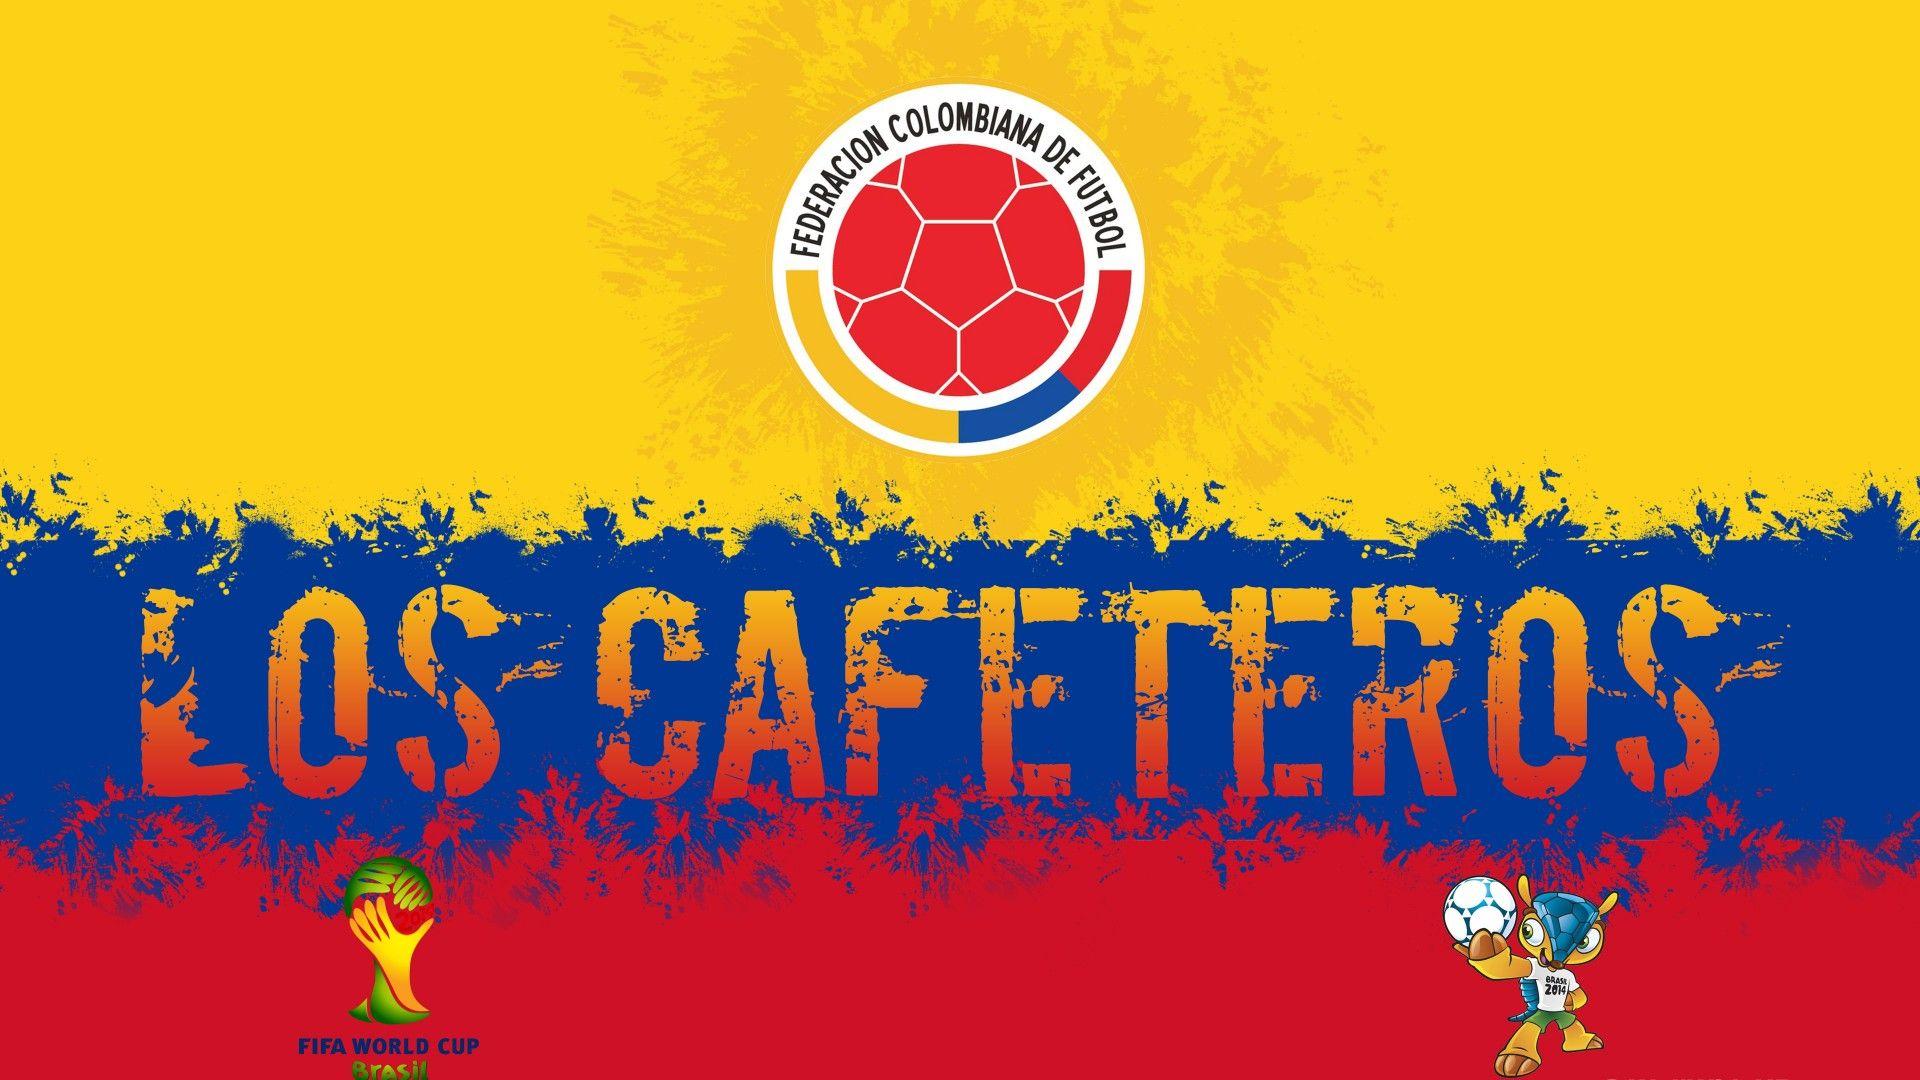 colombia world cup 2014. Los Cafeteros 2014 Colombia